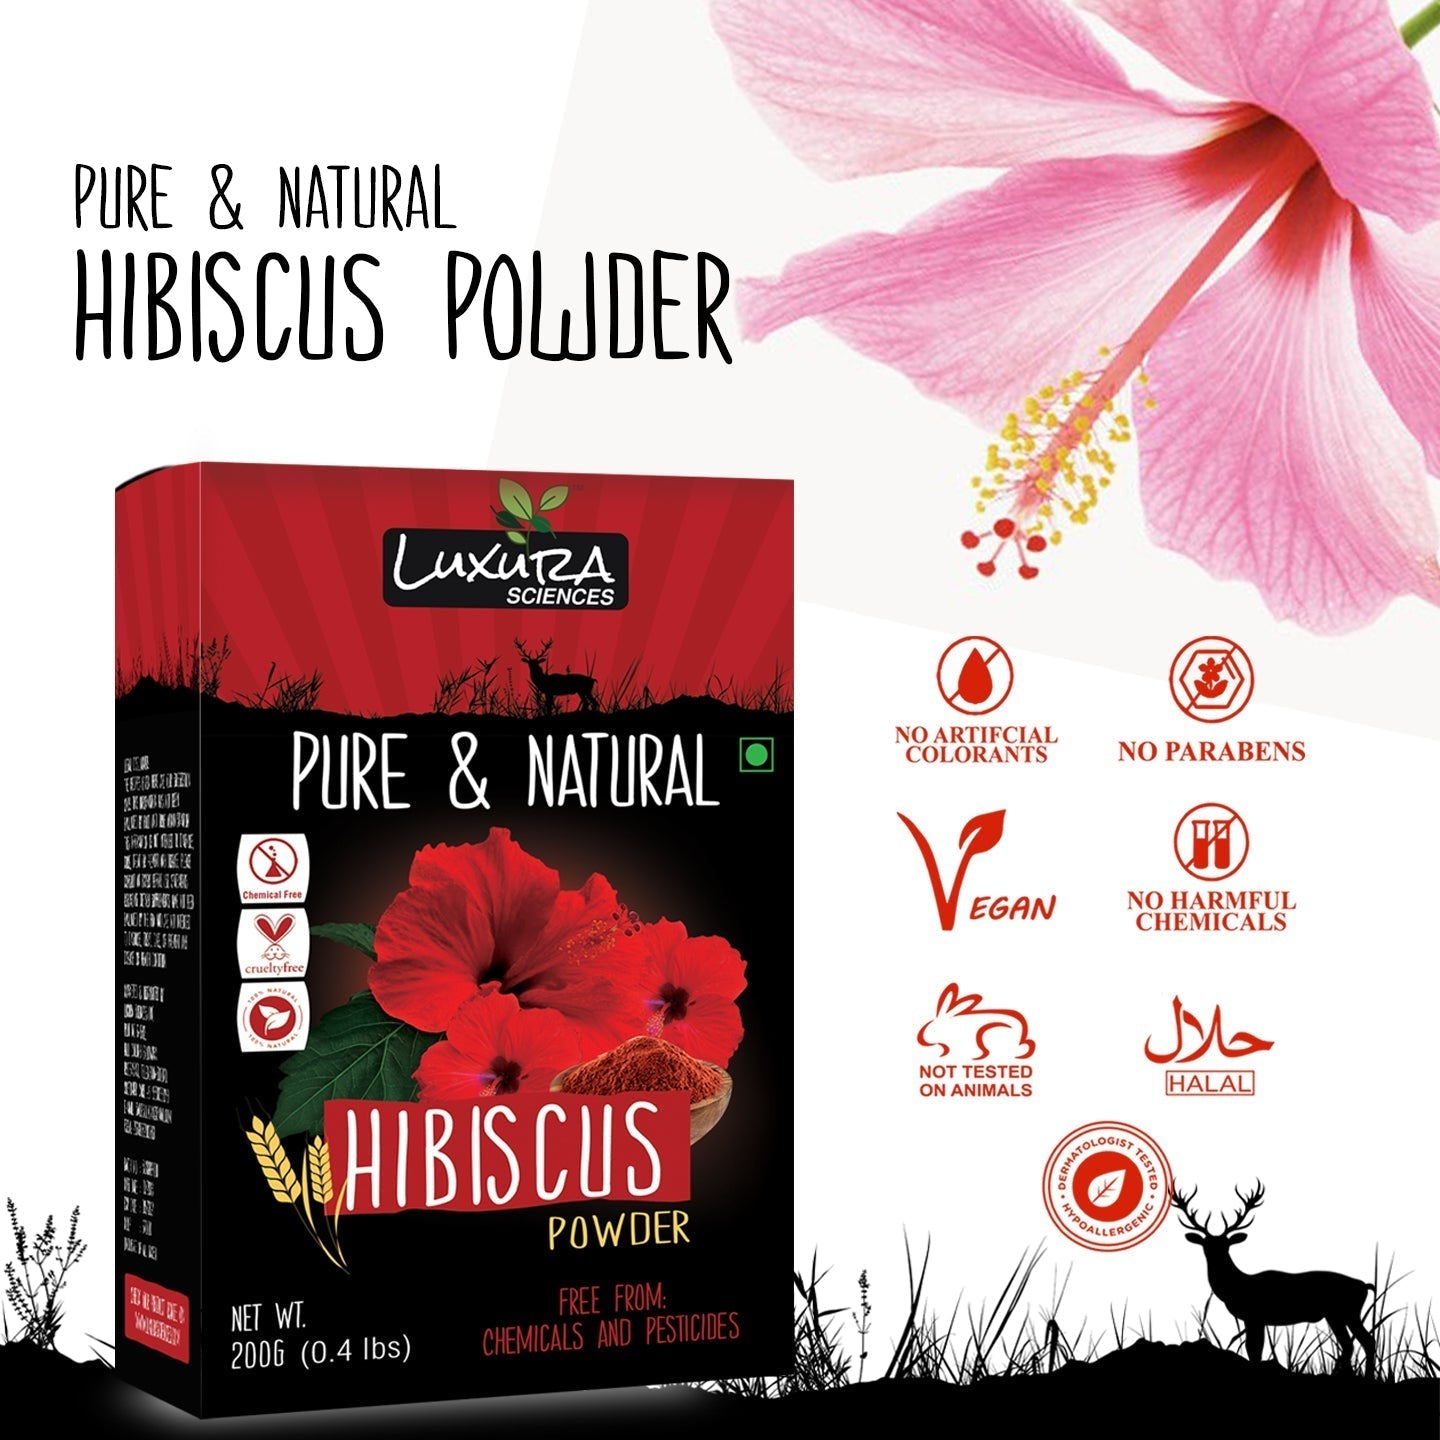 Luxura Sciences Hibiscus Powder For Hair Improvement